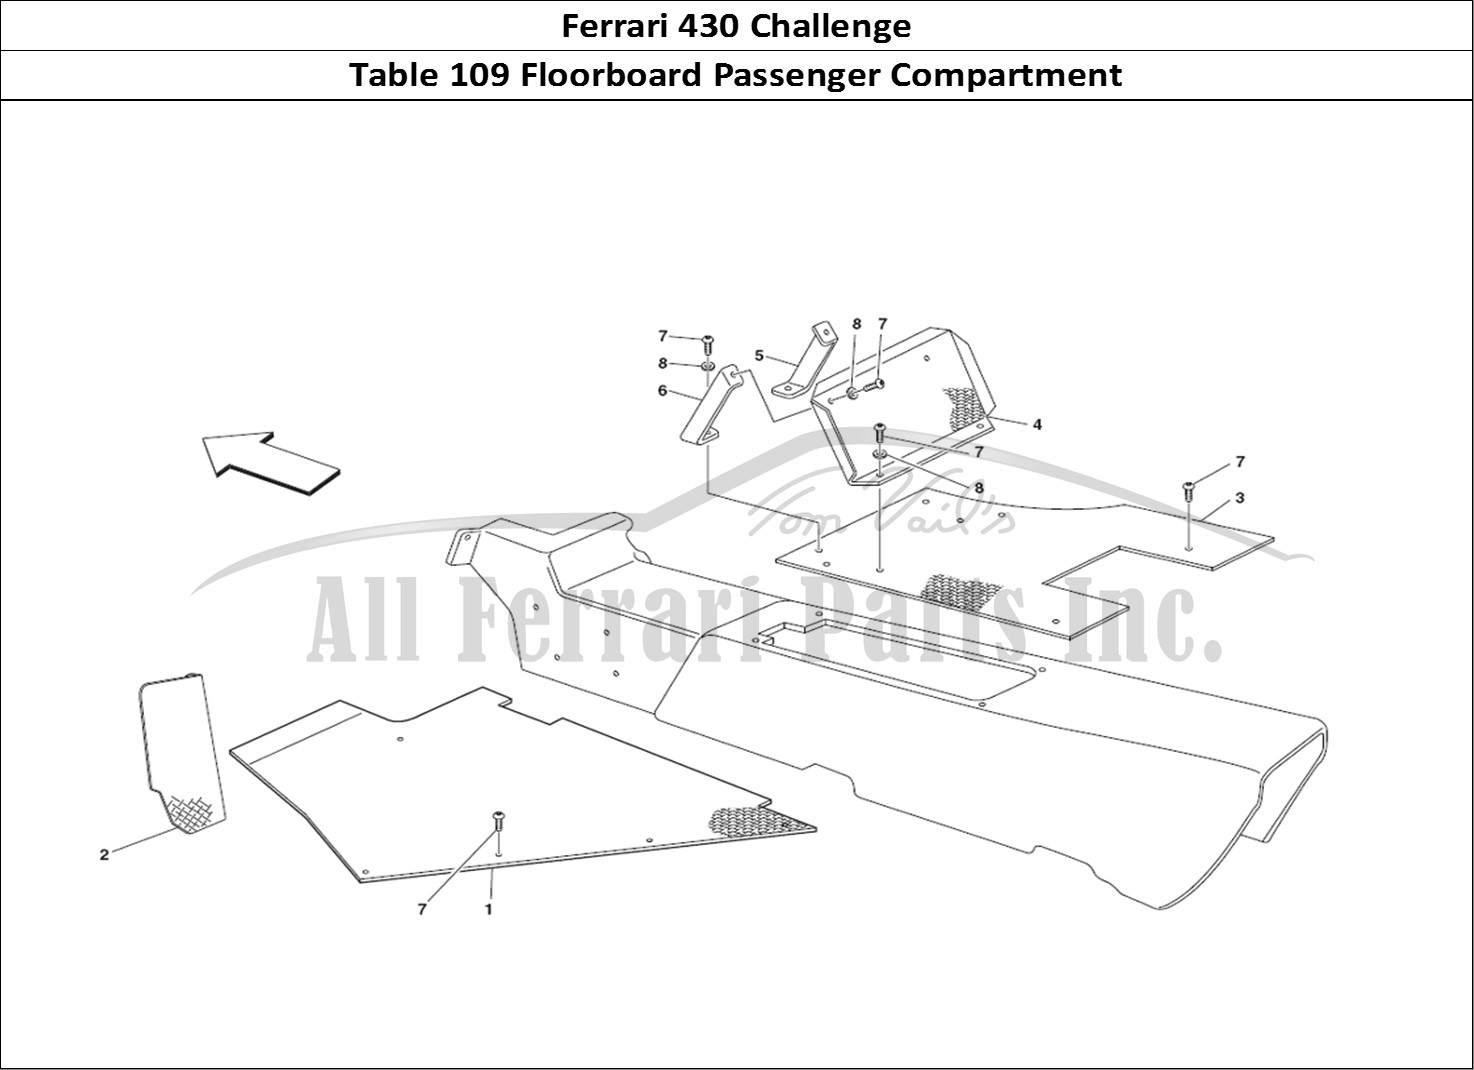 Ferrari Parts Ferrari 430 Challenge (2006) Page 109 passengers compartment fo